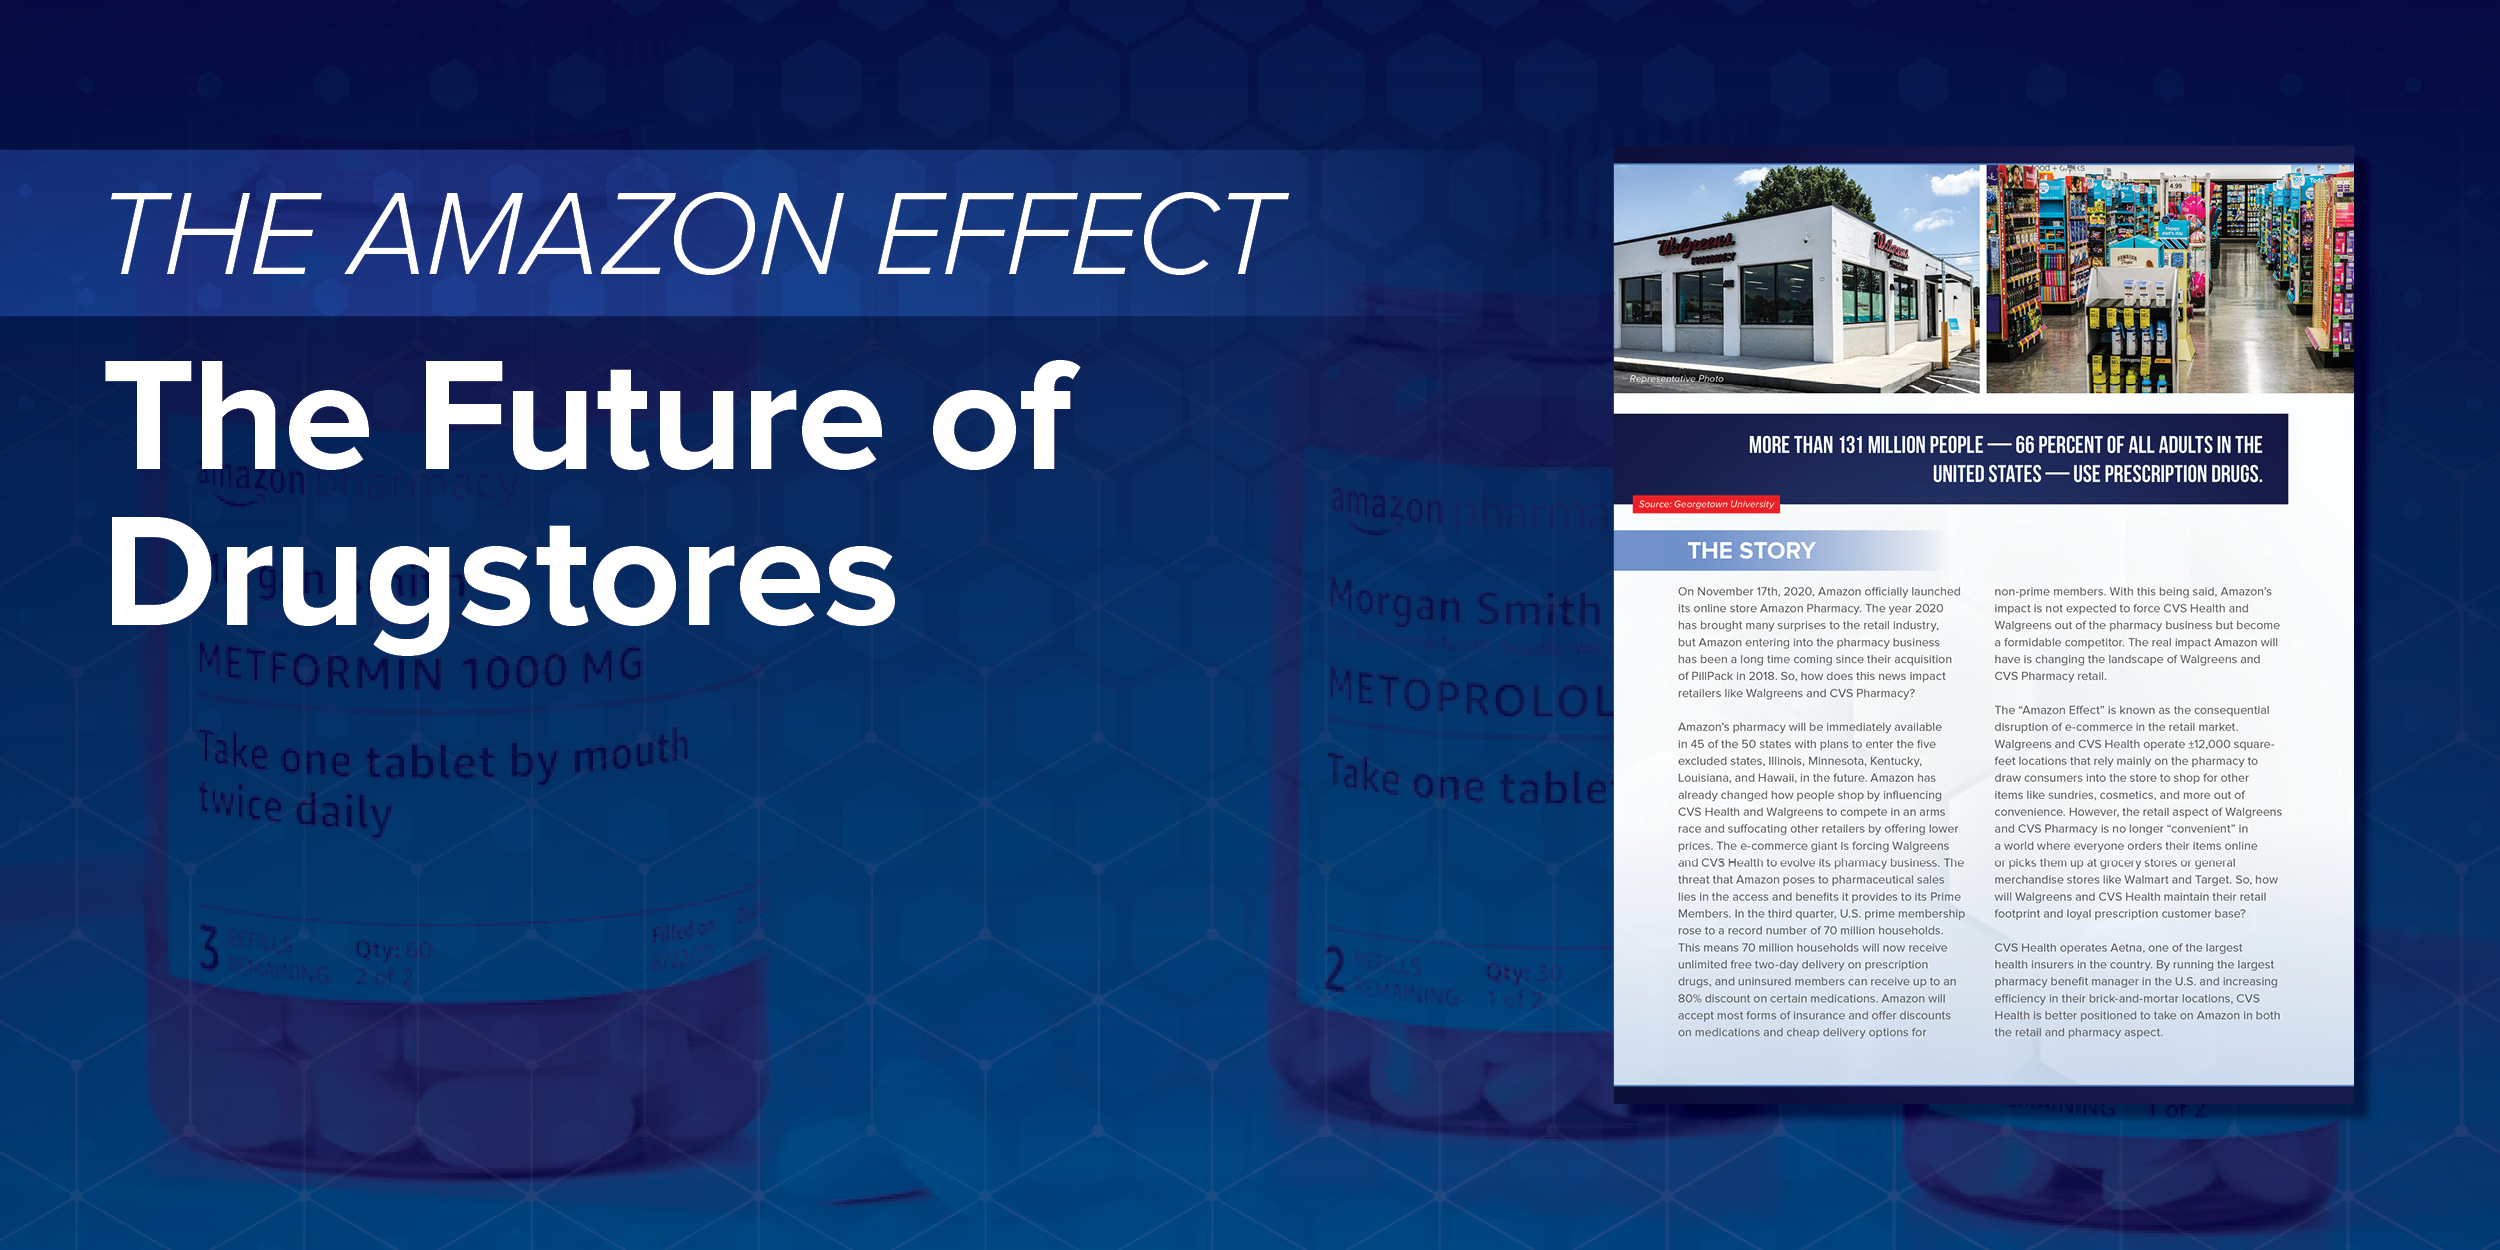 Email_Amazon Pharmacy Impact